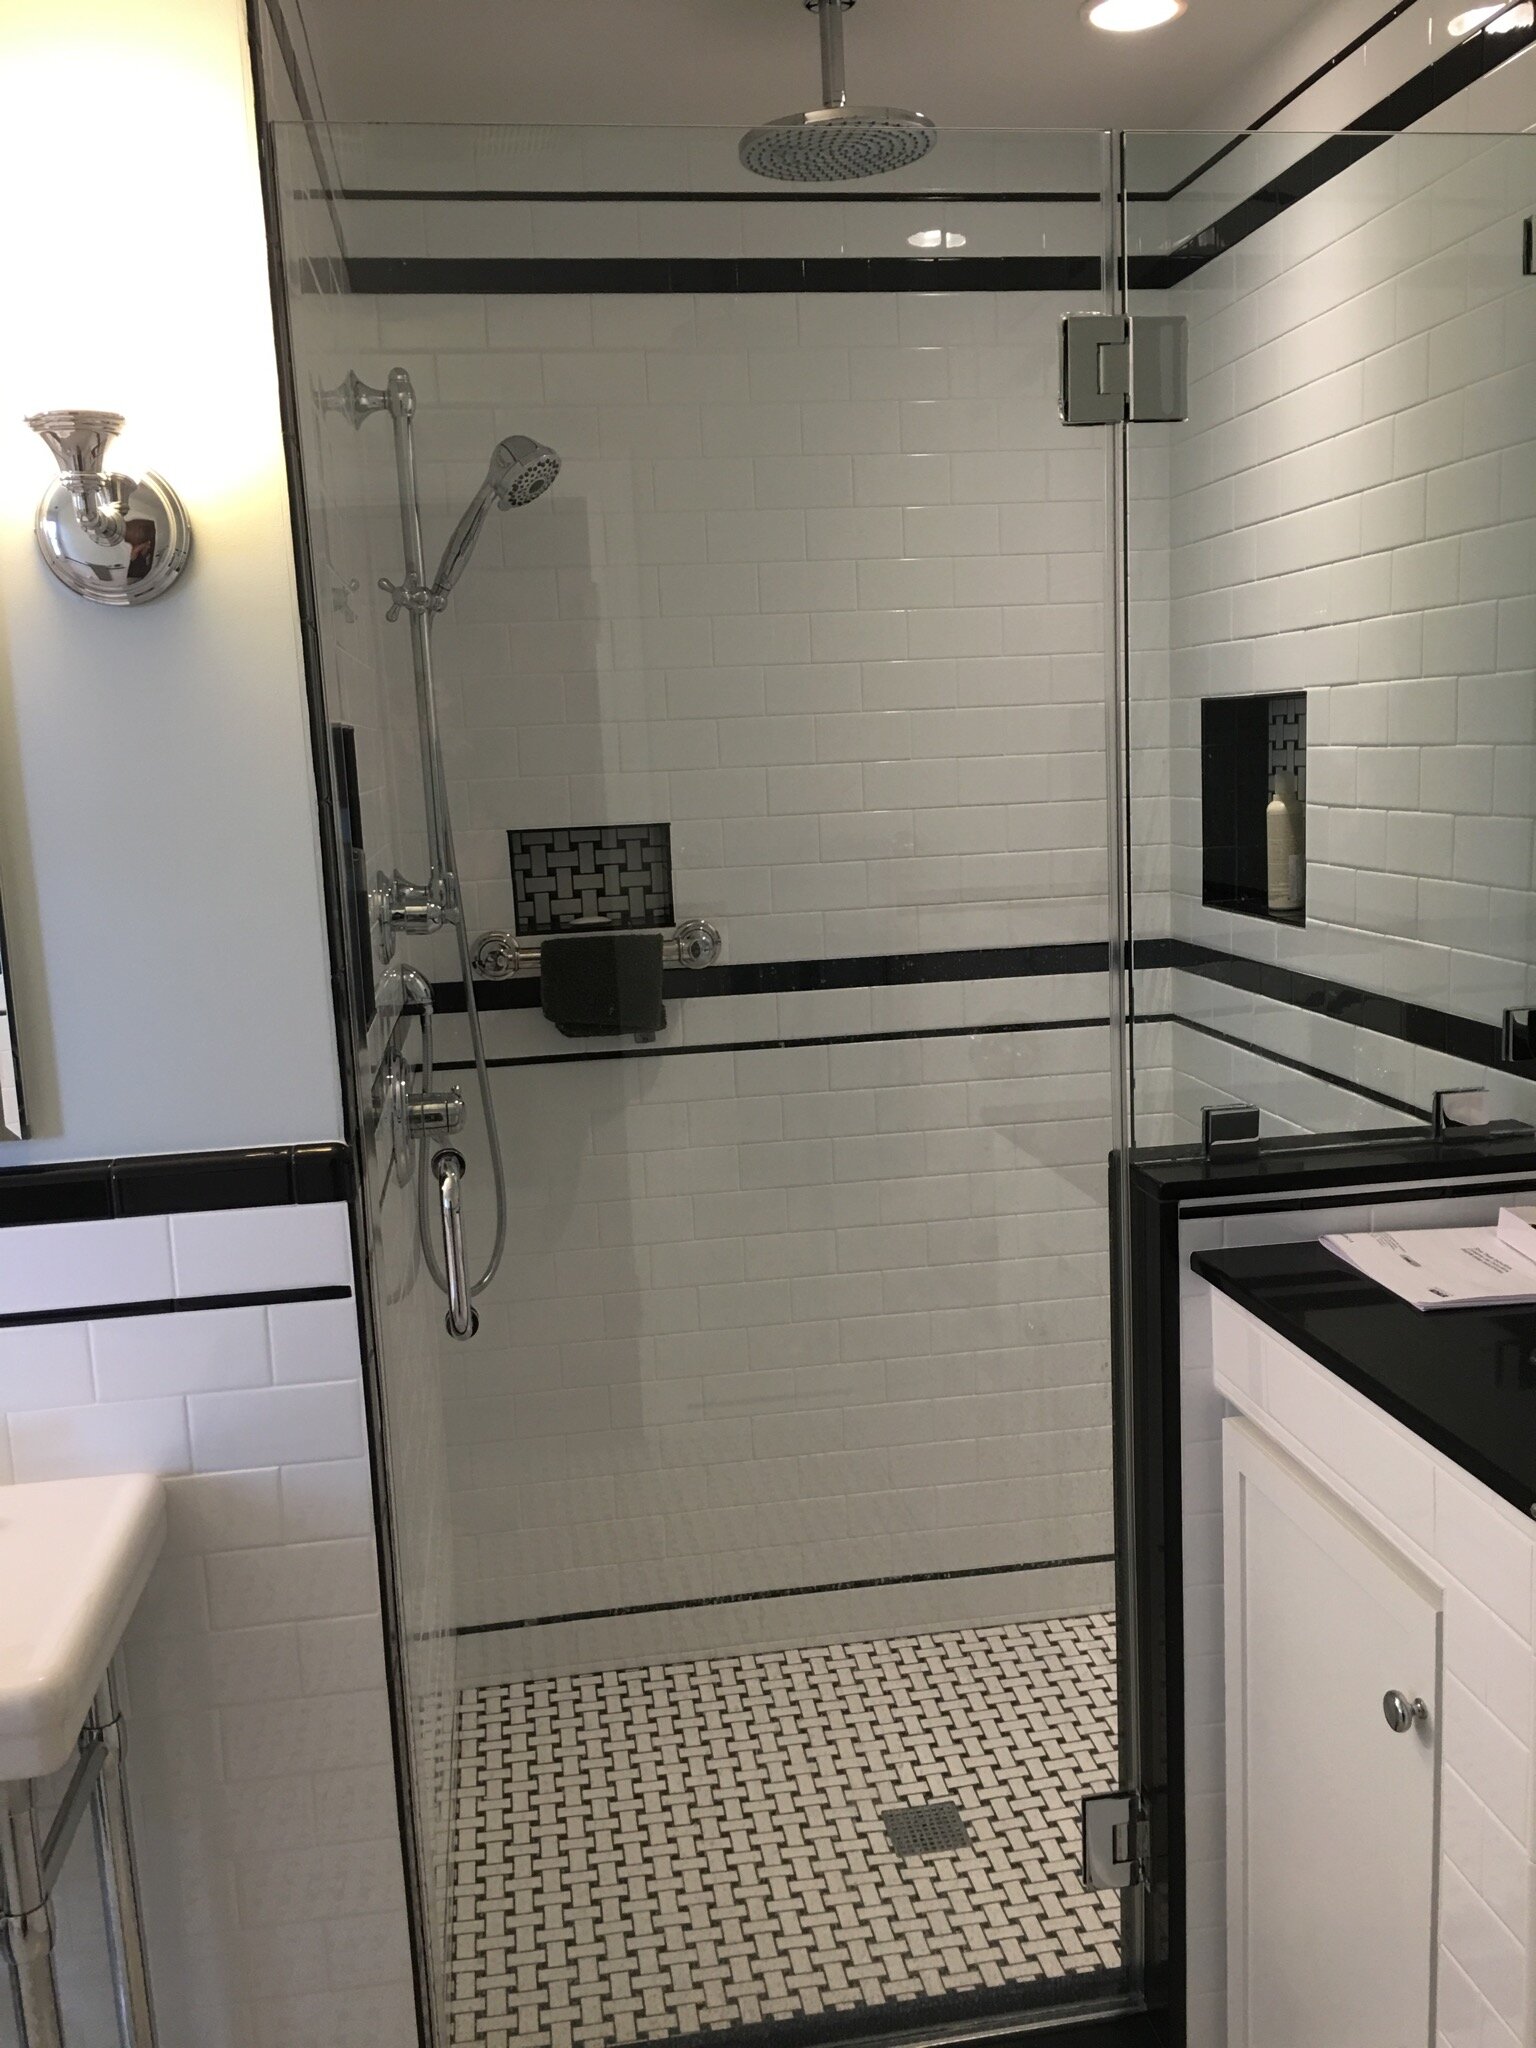  Full Bathroom Remodel:  New Plumbing, Glass Shower, Wall and Floor Tiles, Vanity with Countertop, Mirror, and Lighting. 